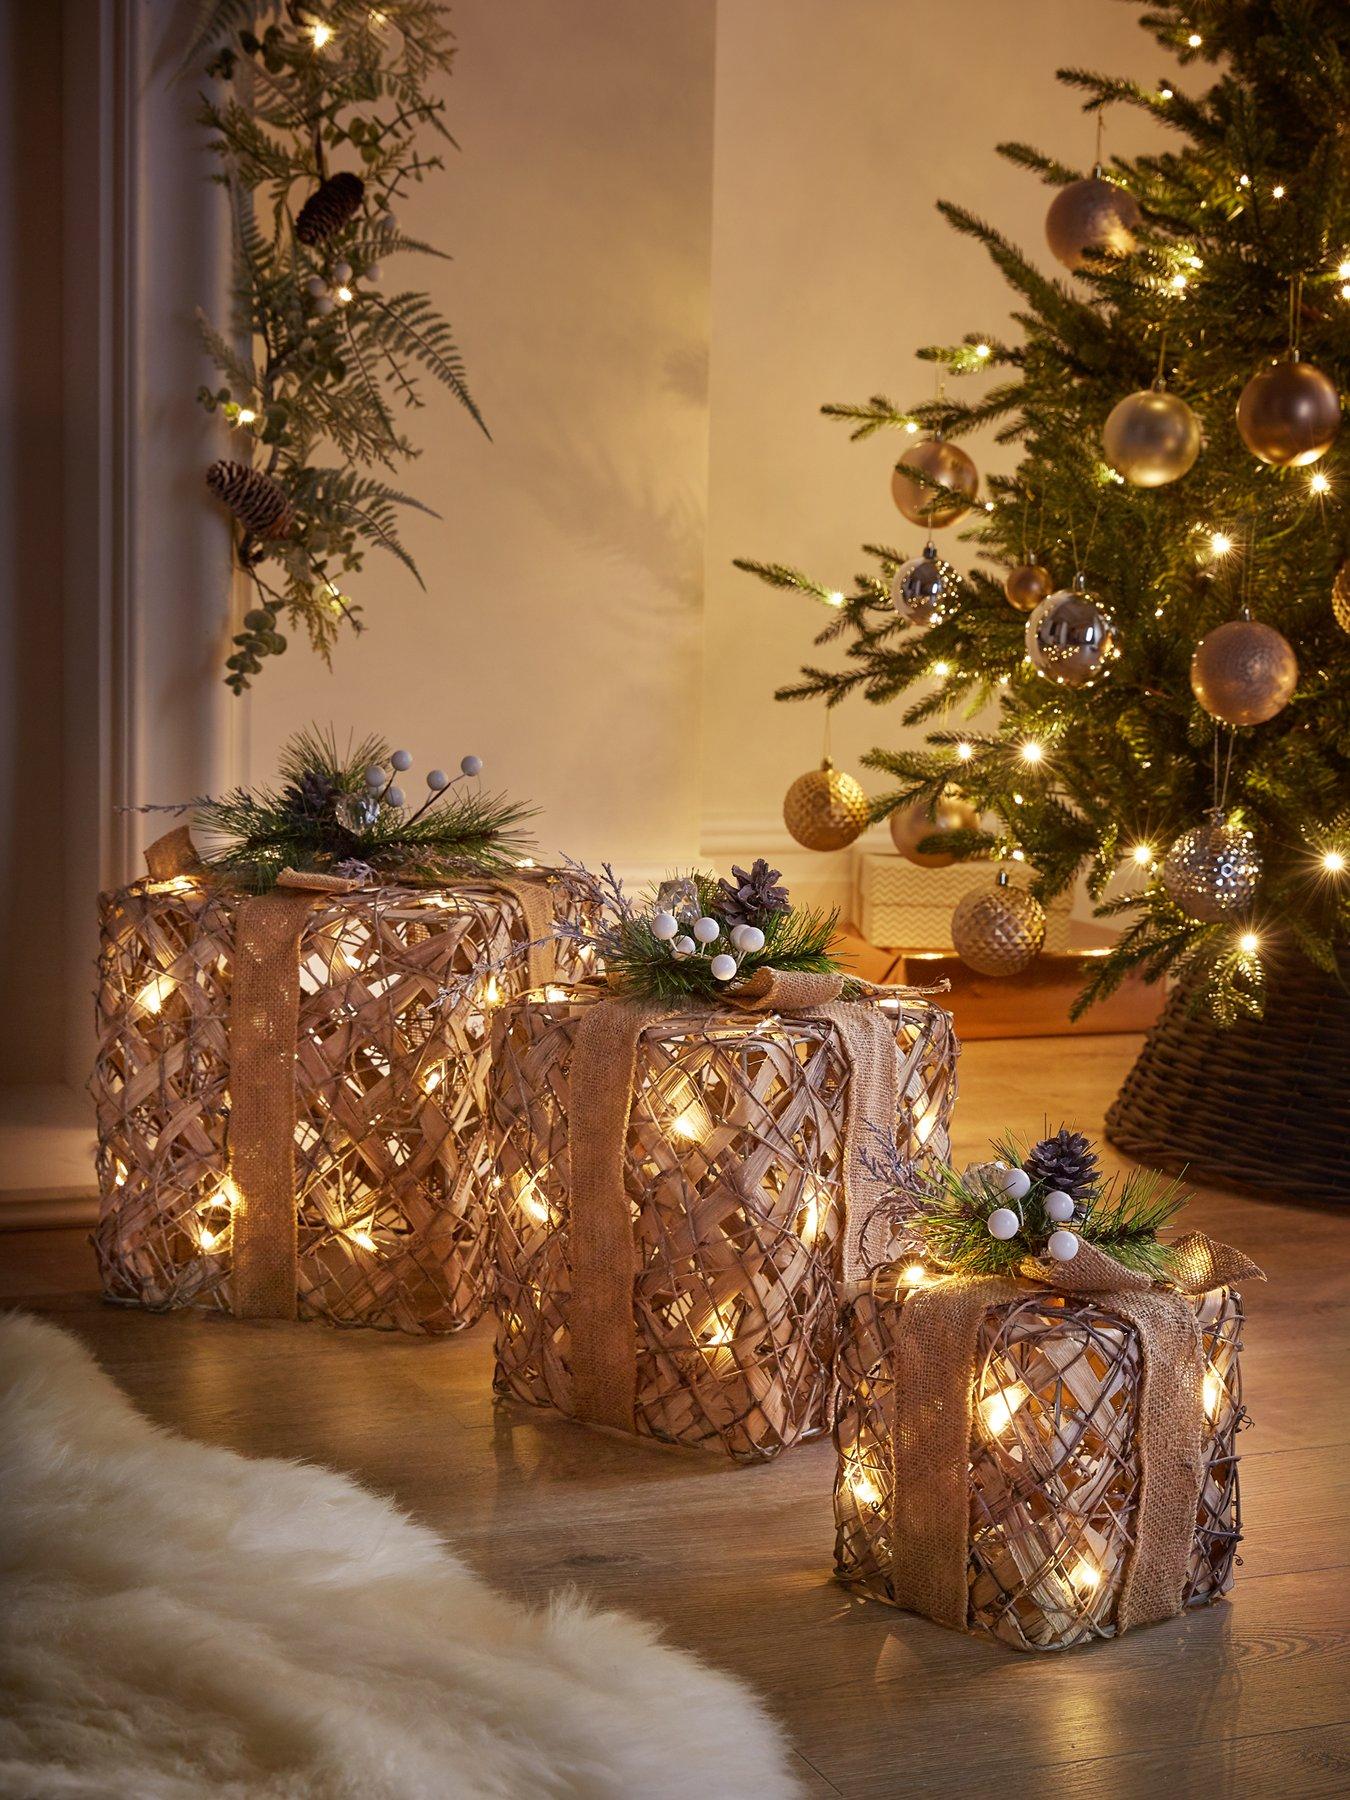 Large Christmas Santa Sack Xmas Felt Gift Present Stocking Bag Filler 60 x  50cm